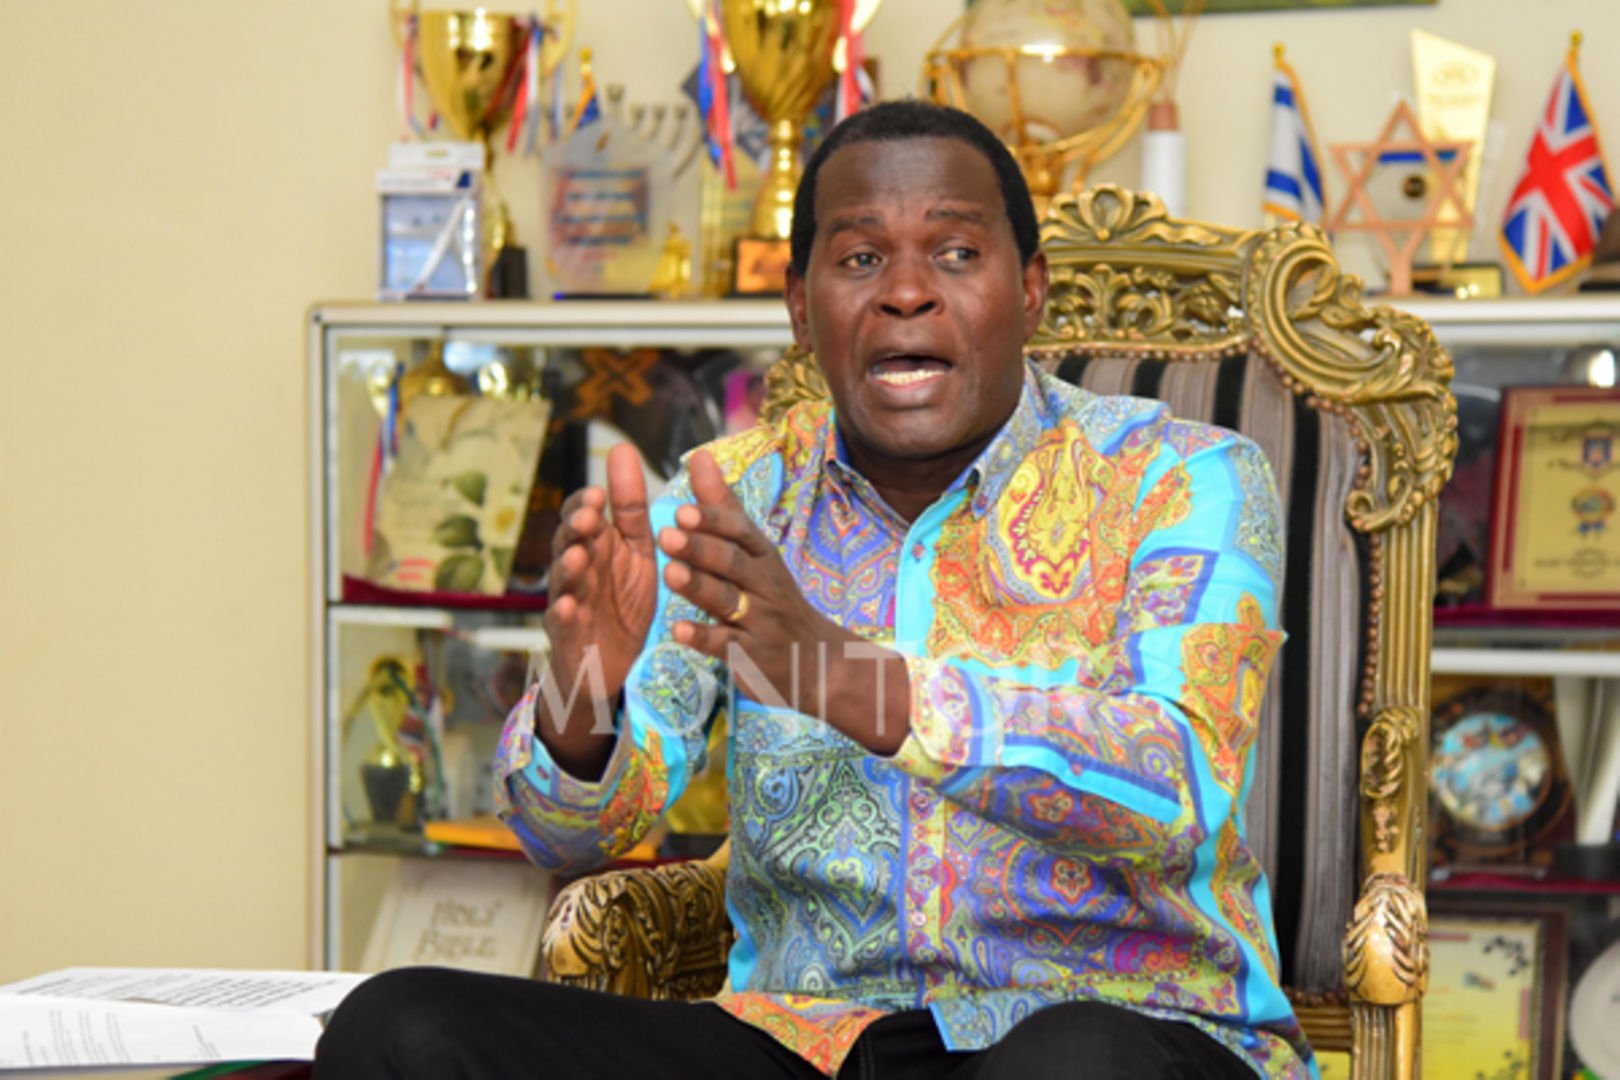 Our tick drug is not harmful, says Pastor Kayanja | Monitor